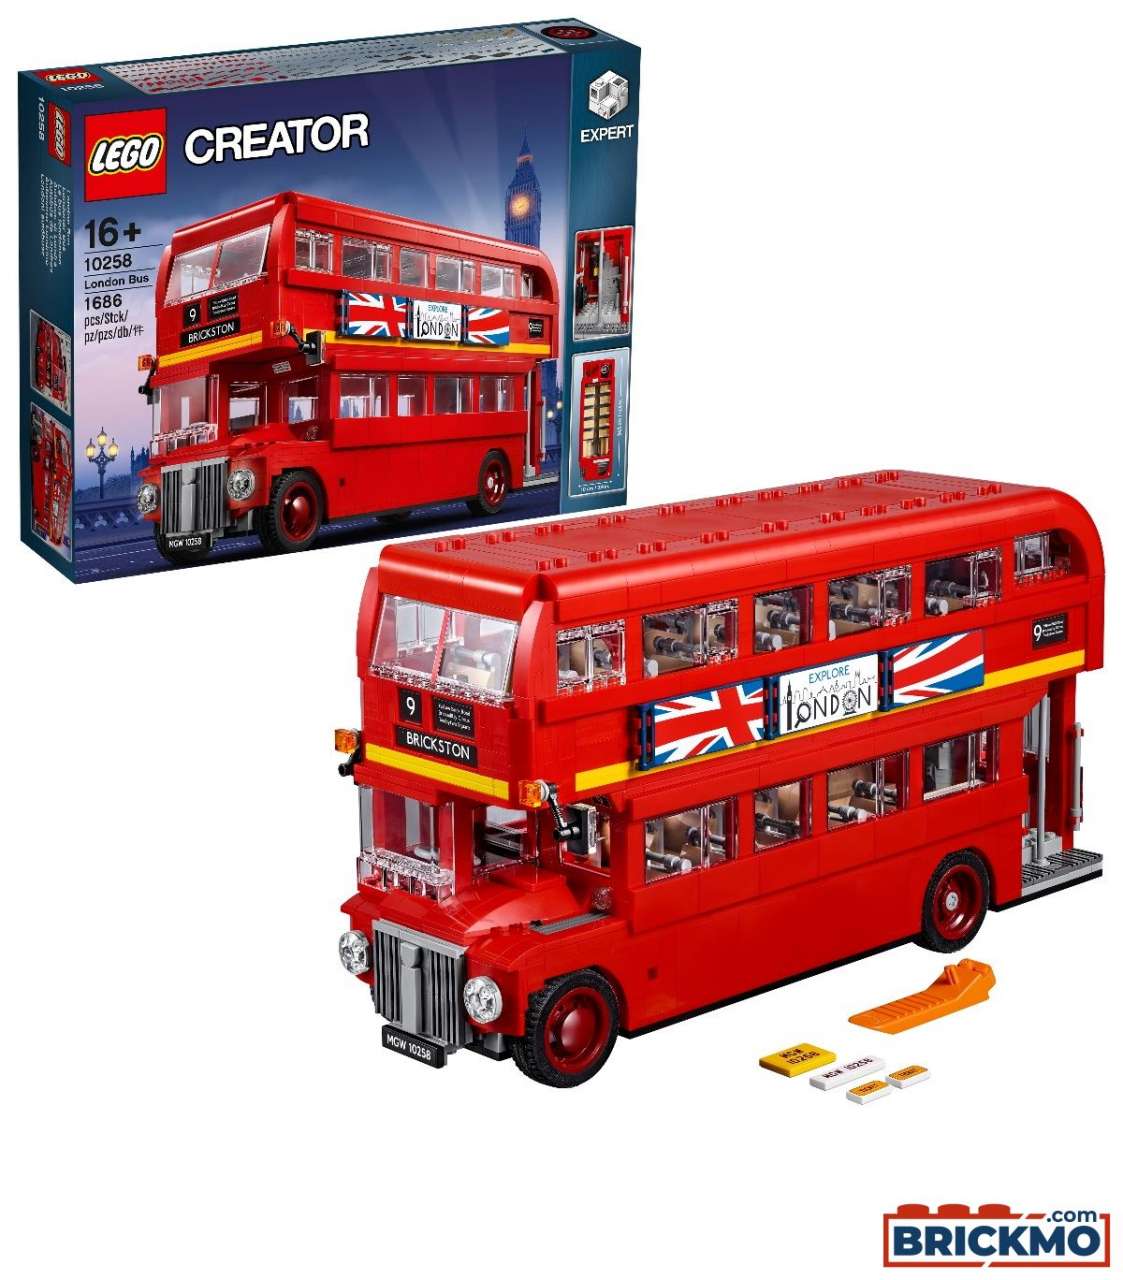 LEGO Creator 10258 Londoner Bus 10258